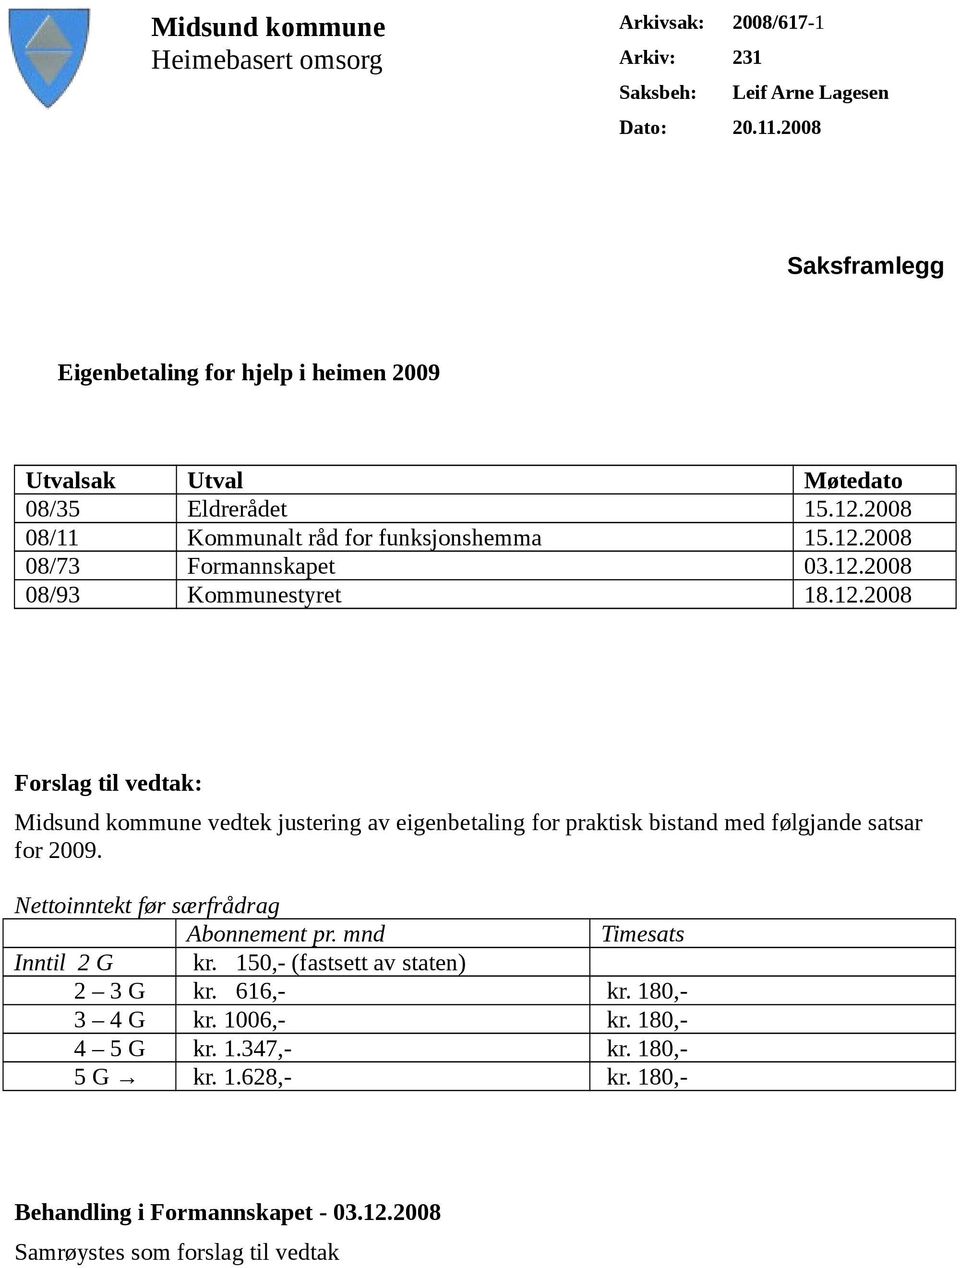 12.2008 08/93 Kommunestyret 18.12.2008 Forslag til vedtak: Midsund kommune vedtek justering av eigenbetaling for praktisk bistand med følgjande satsar for 2009.